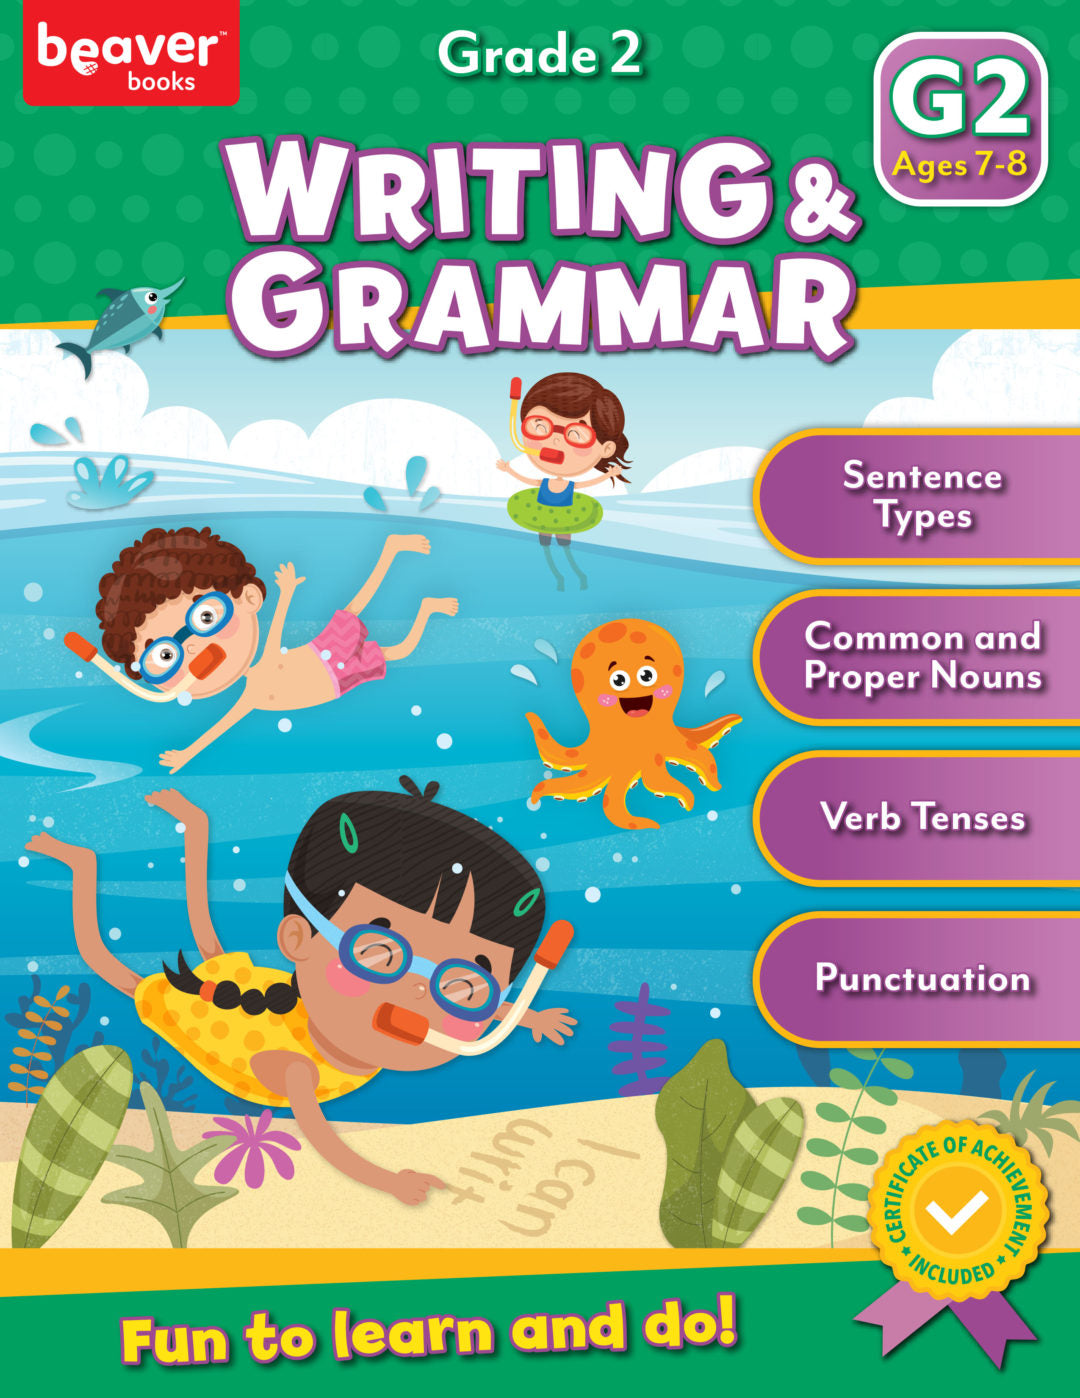 beaver books Writing & Grammar : Grade 2